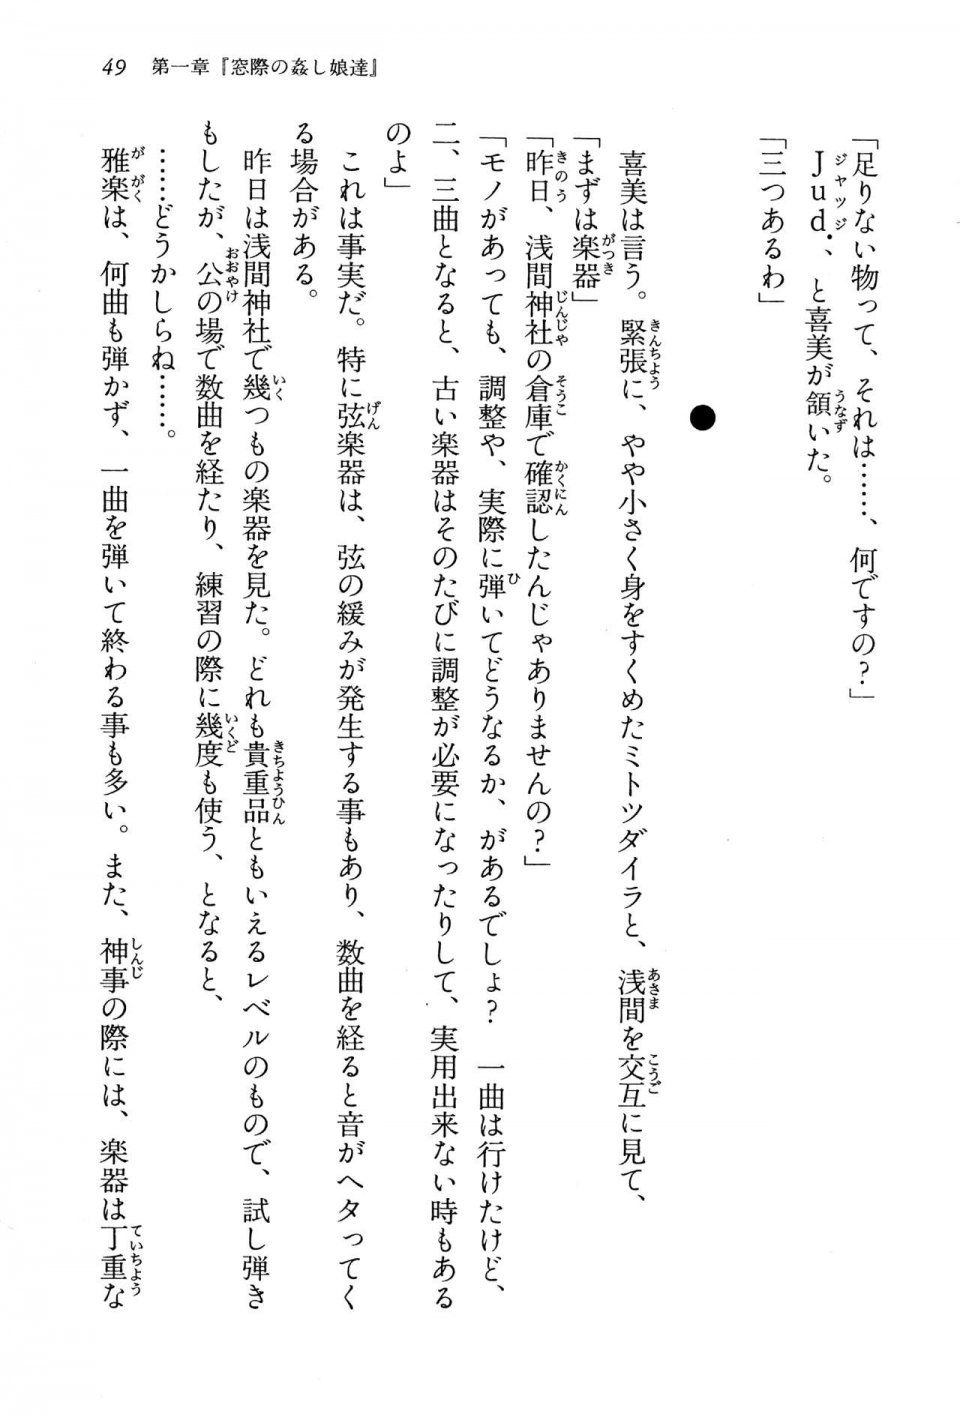 Kyoukai Senjou no Horizon BD Special Mininovel Vol 5(3A) - Photo #53